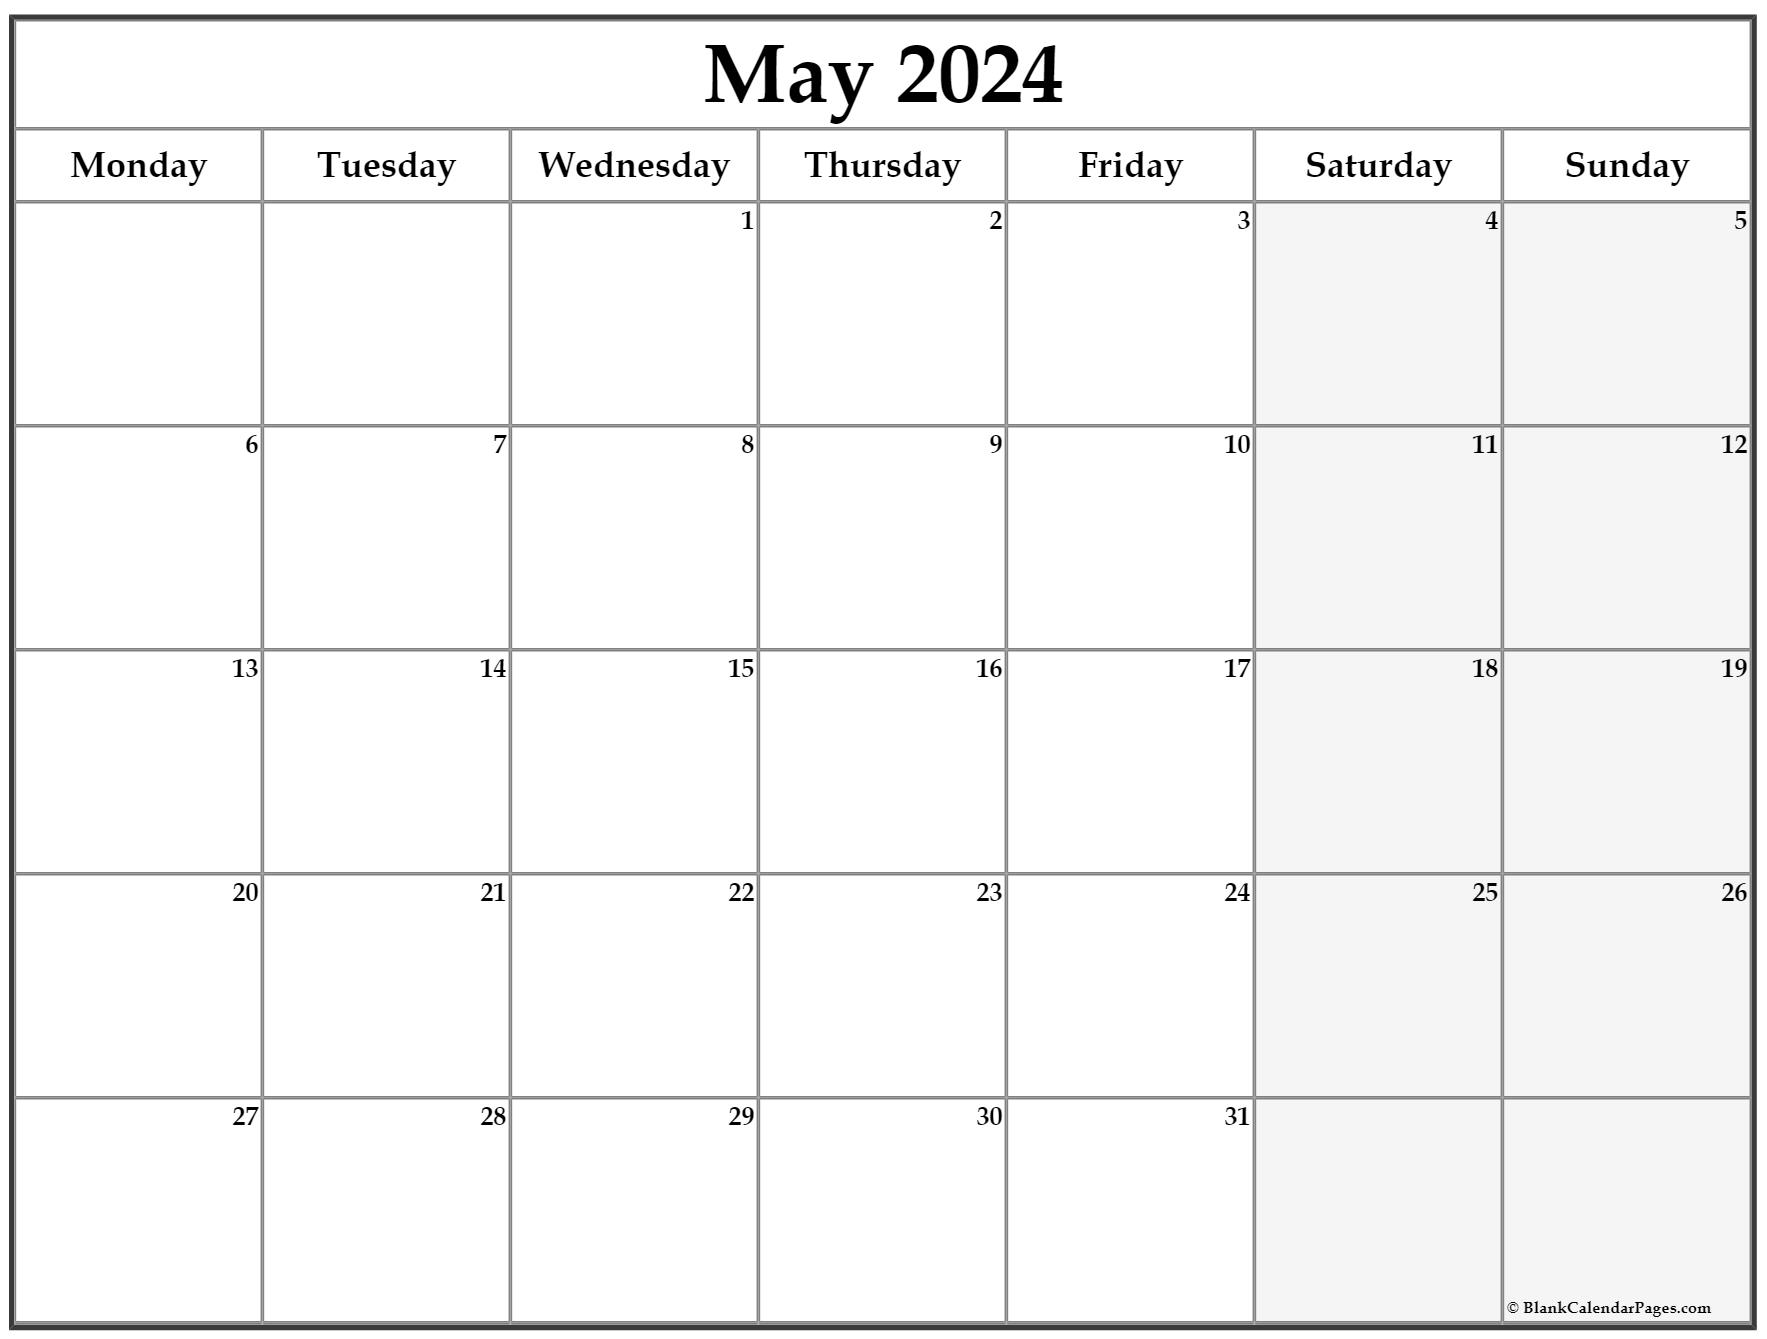 May 2022 Monday Calendar | Monday to Sunday